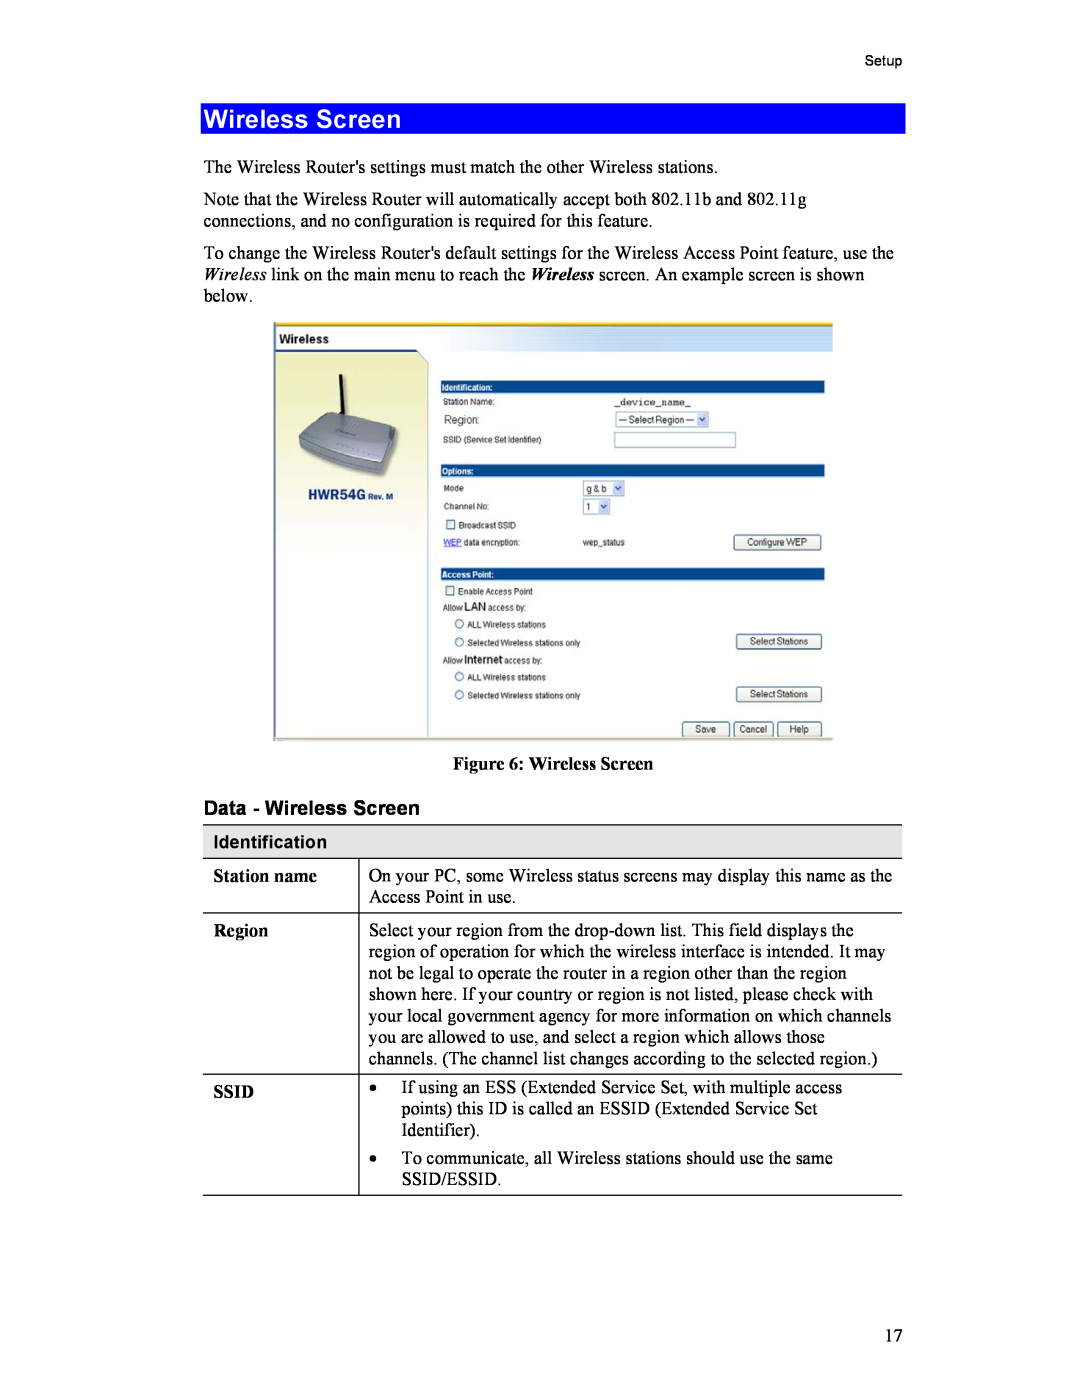 Hawking Technology HWR54G manual Wireless Screen, Identification, Station name, Region, Ssid 